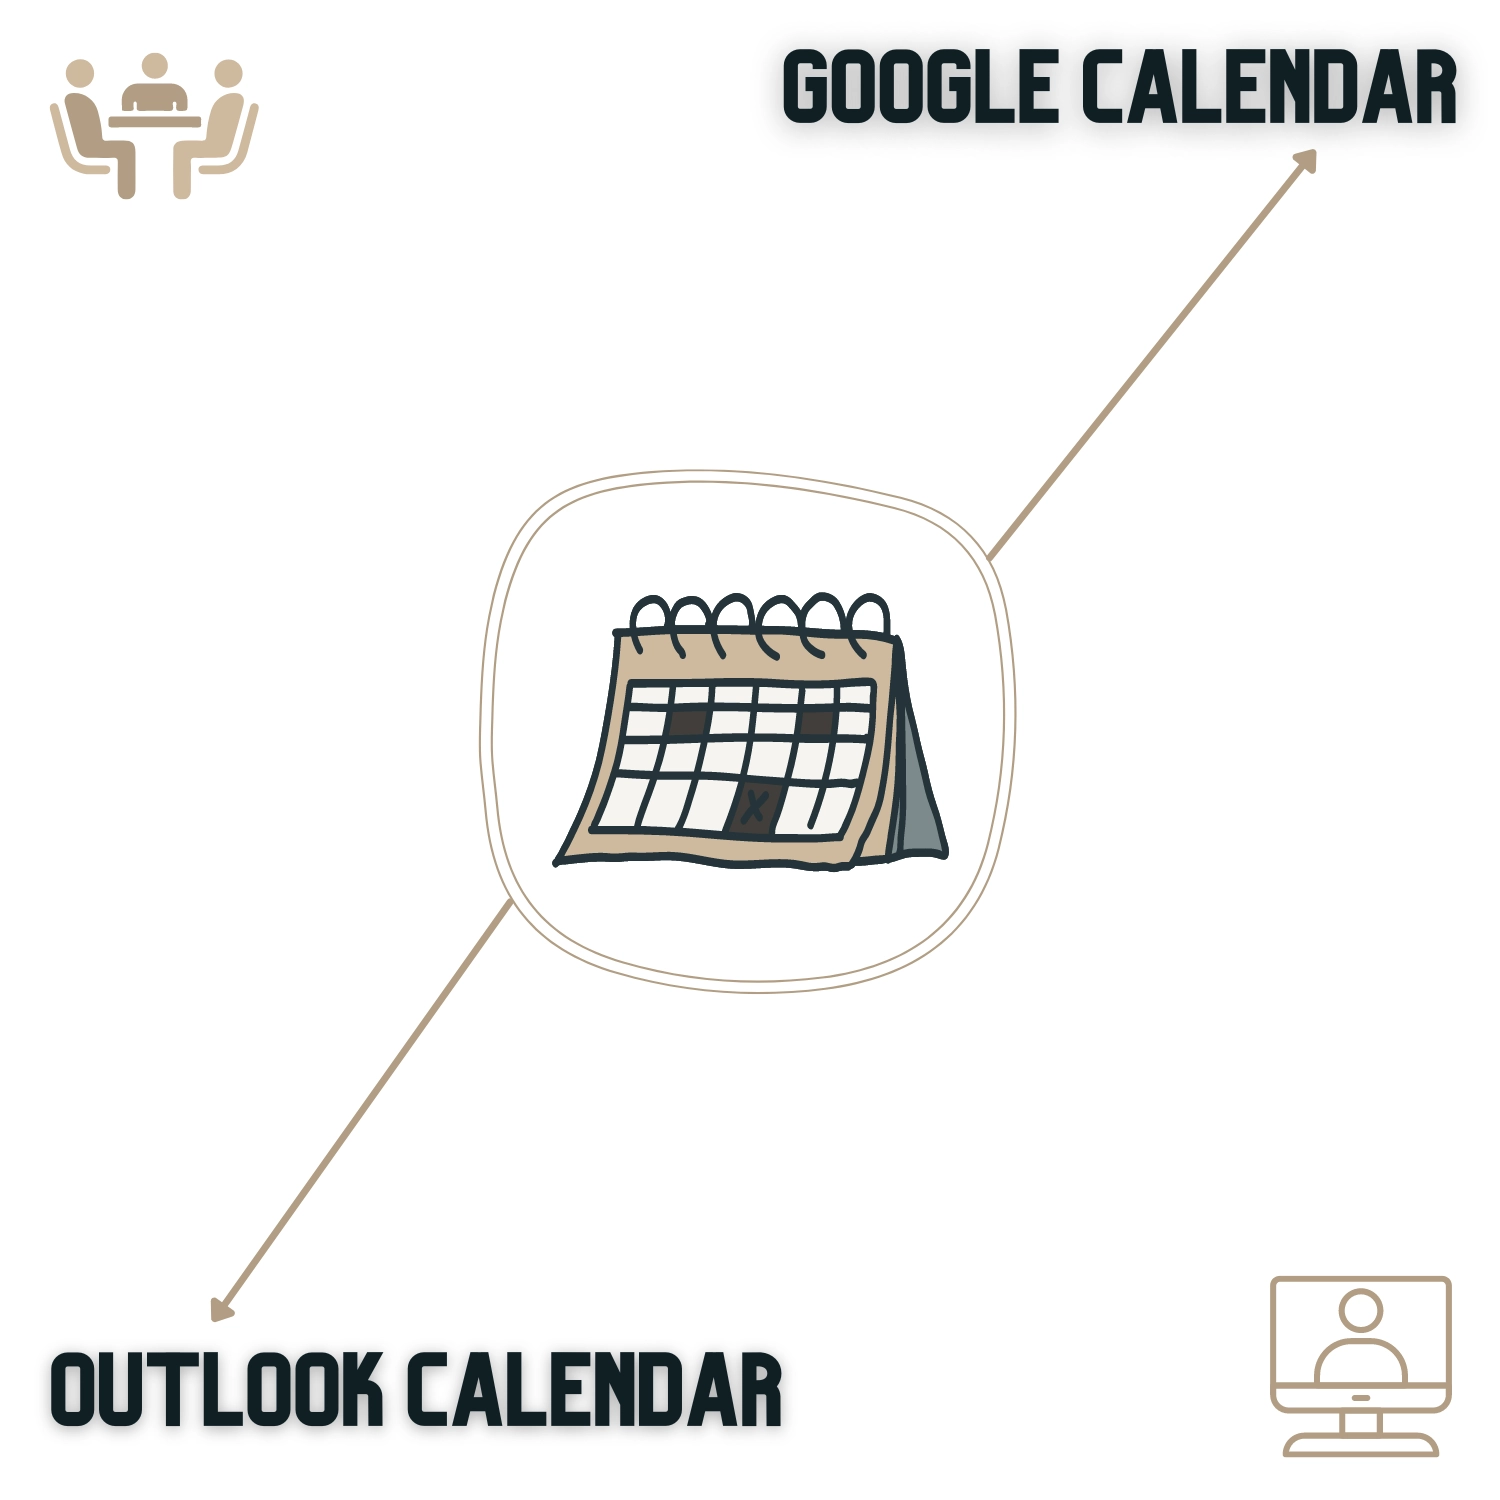 Google Calendar vs Outlook Calendar